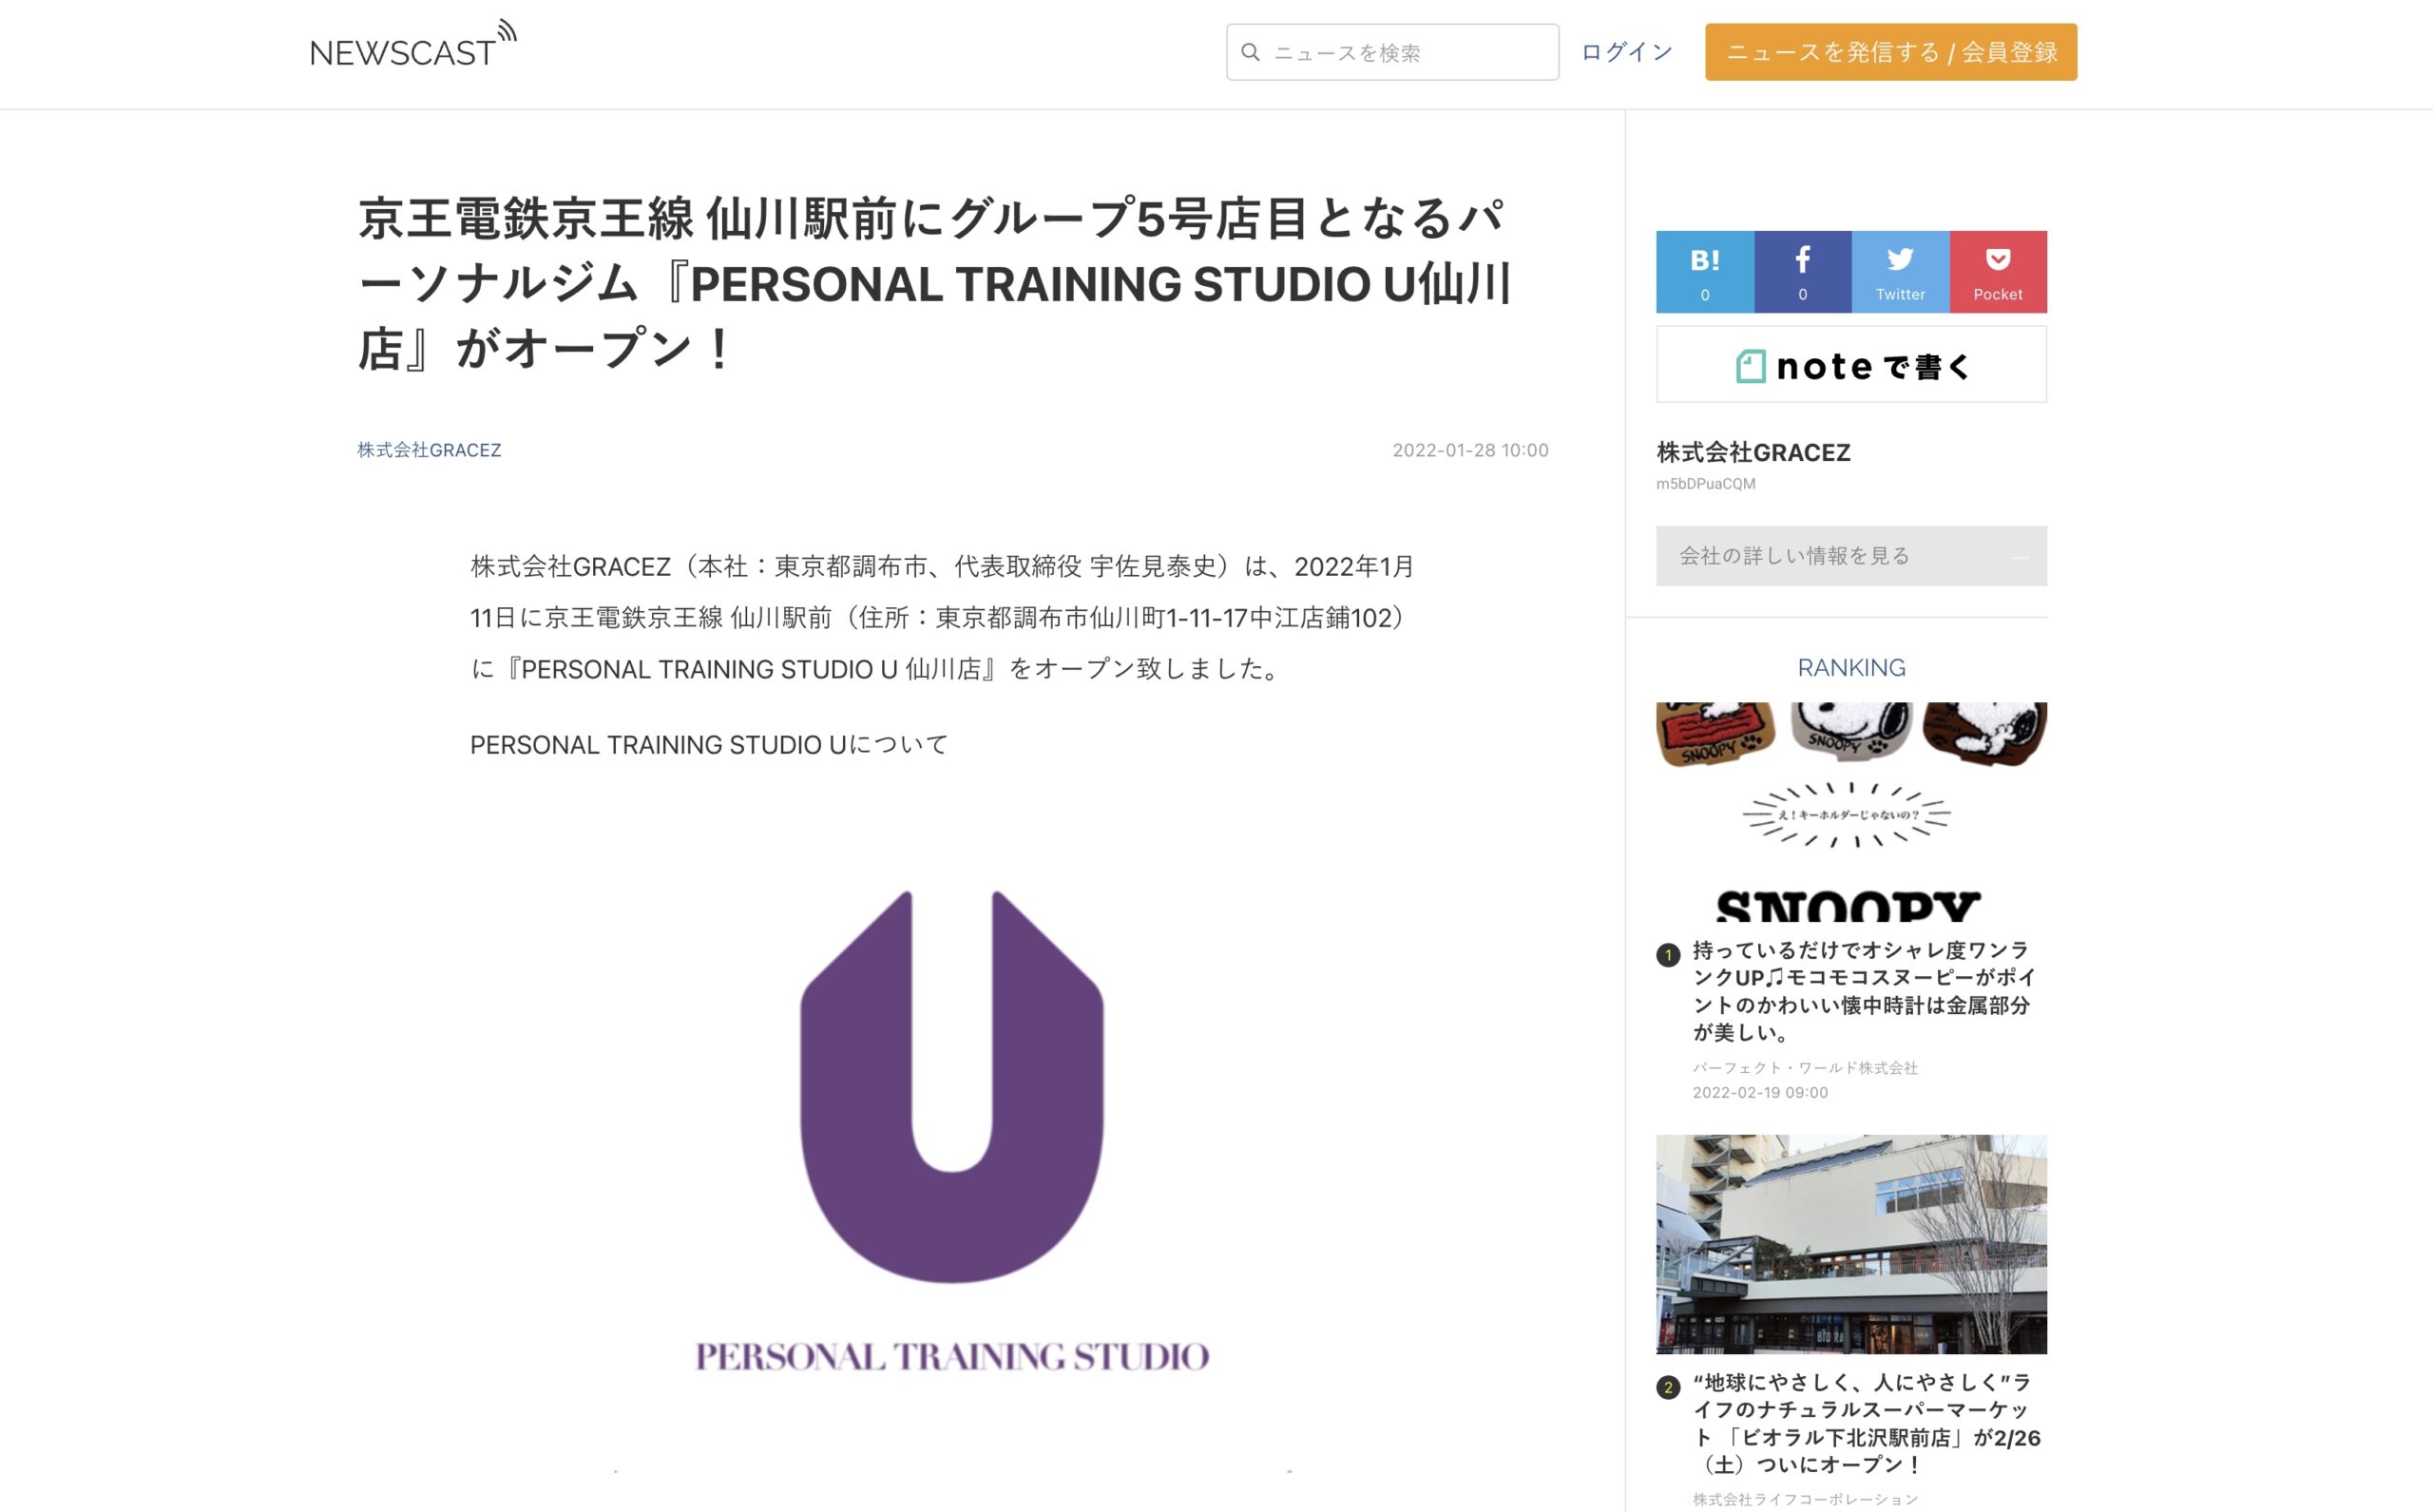 「NEWSCAST」にてPERSONAL TRAINING STUDIO U仙川店のプレスリリース配信を行いました